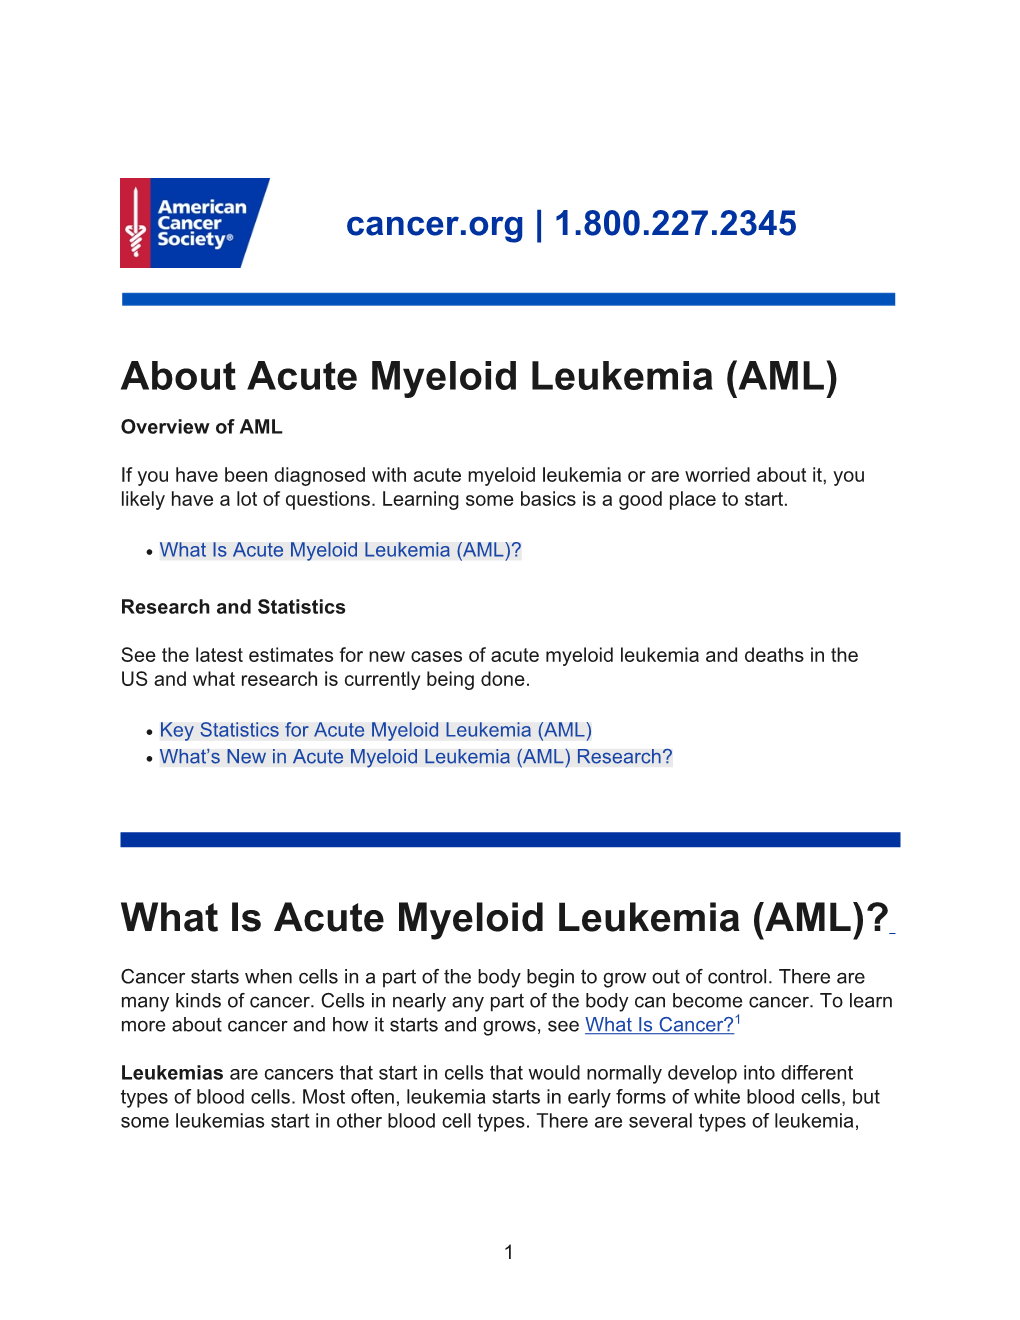 What Is Acute Myeloid Leukemia (AML)?